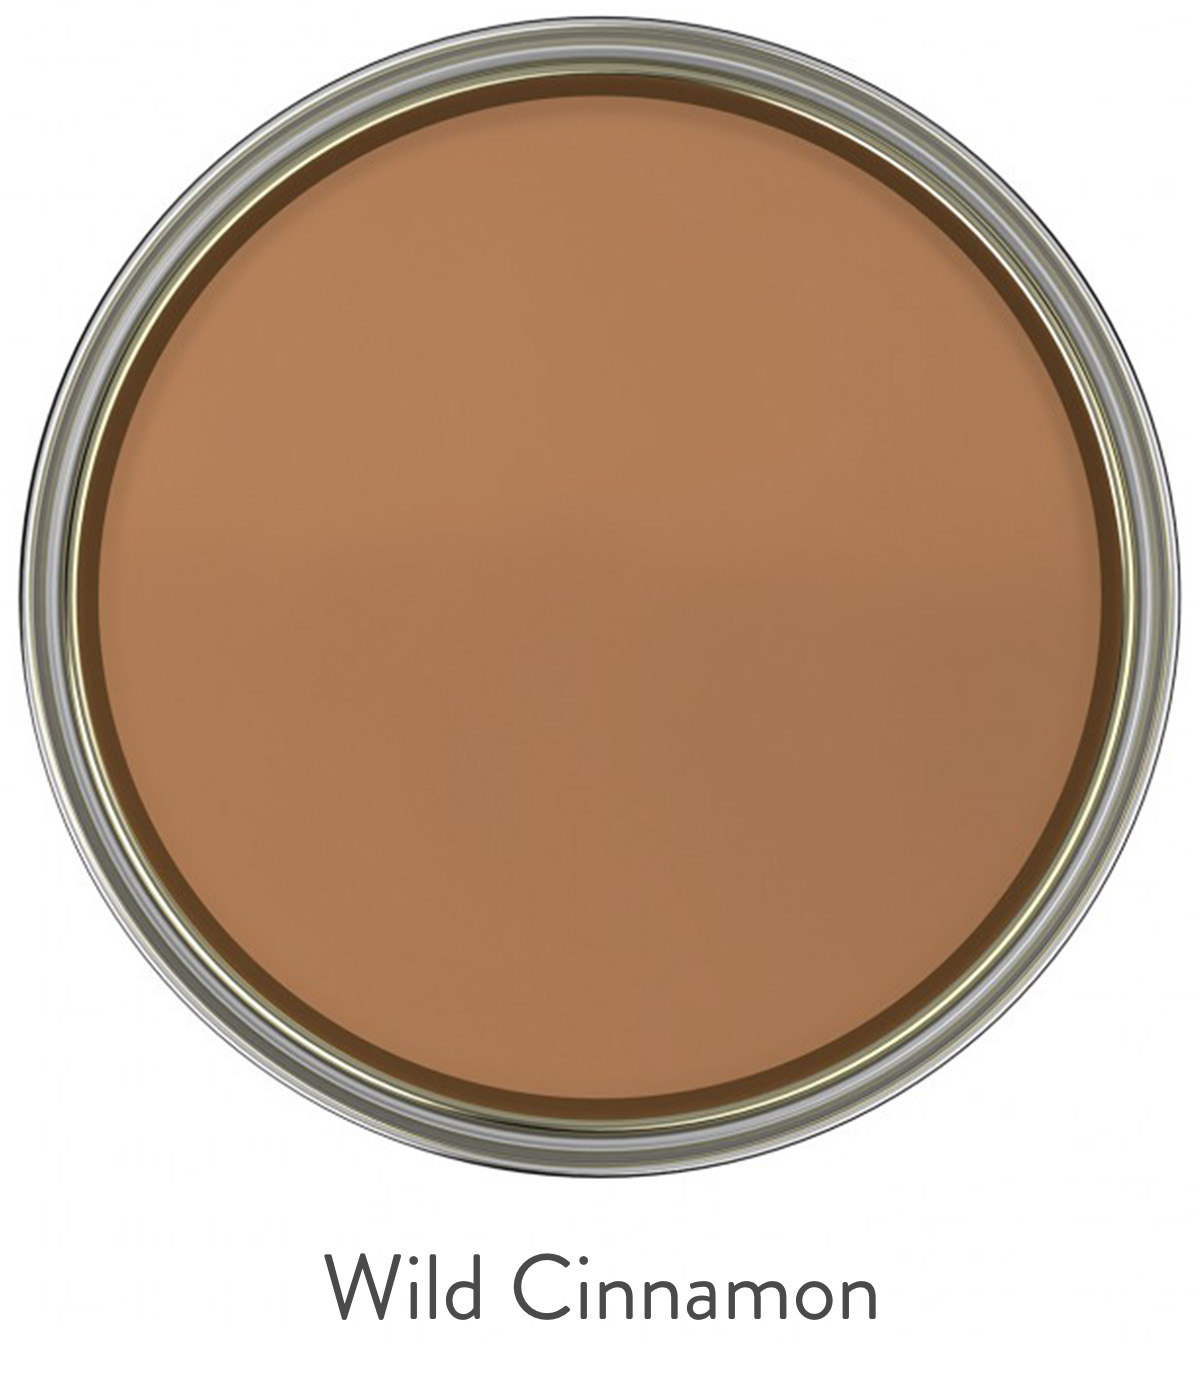 The Pure Edit Wild Cinnamon Paint